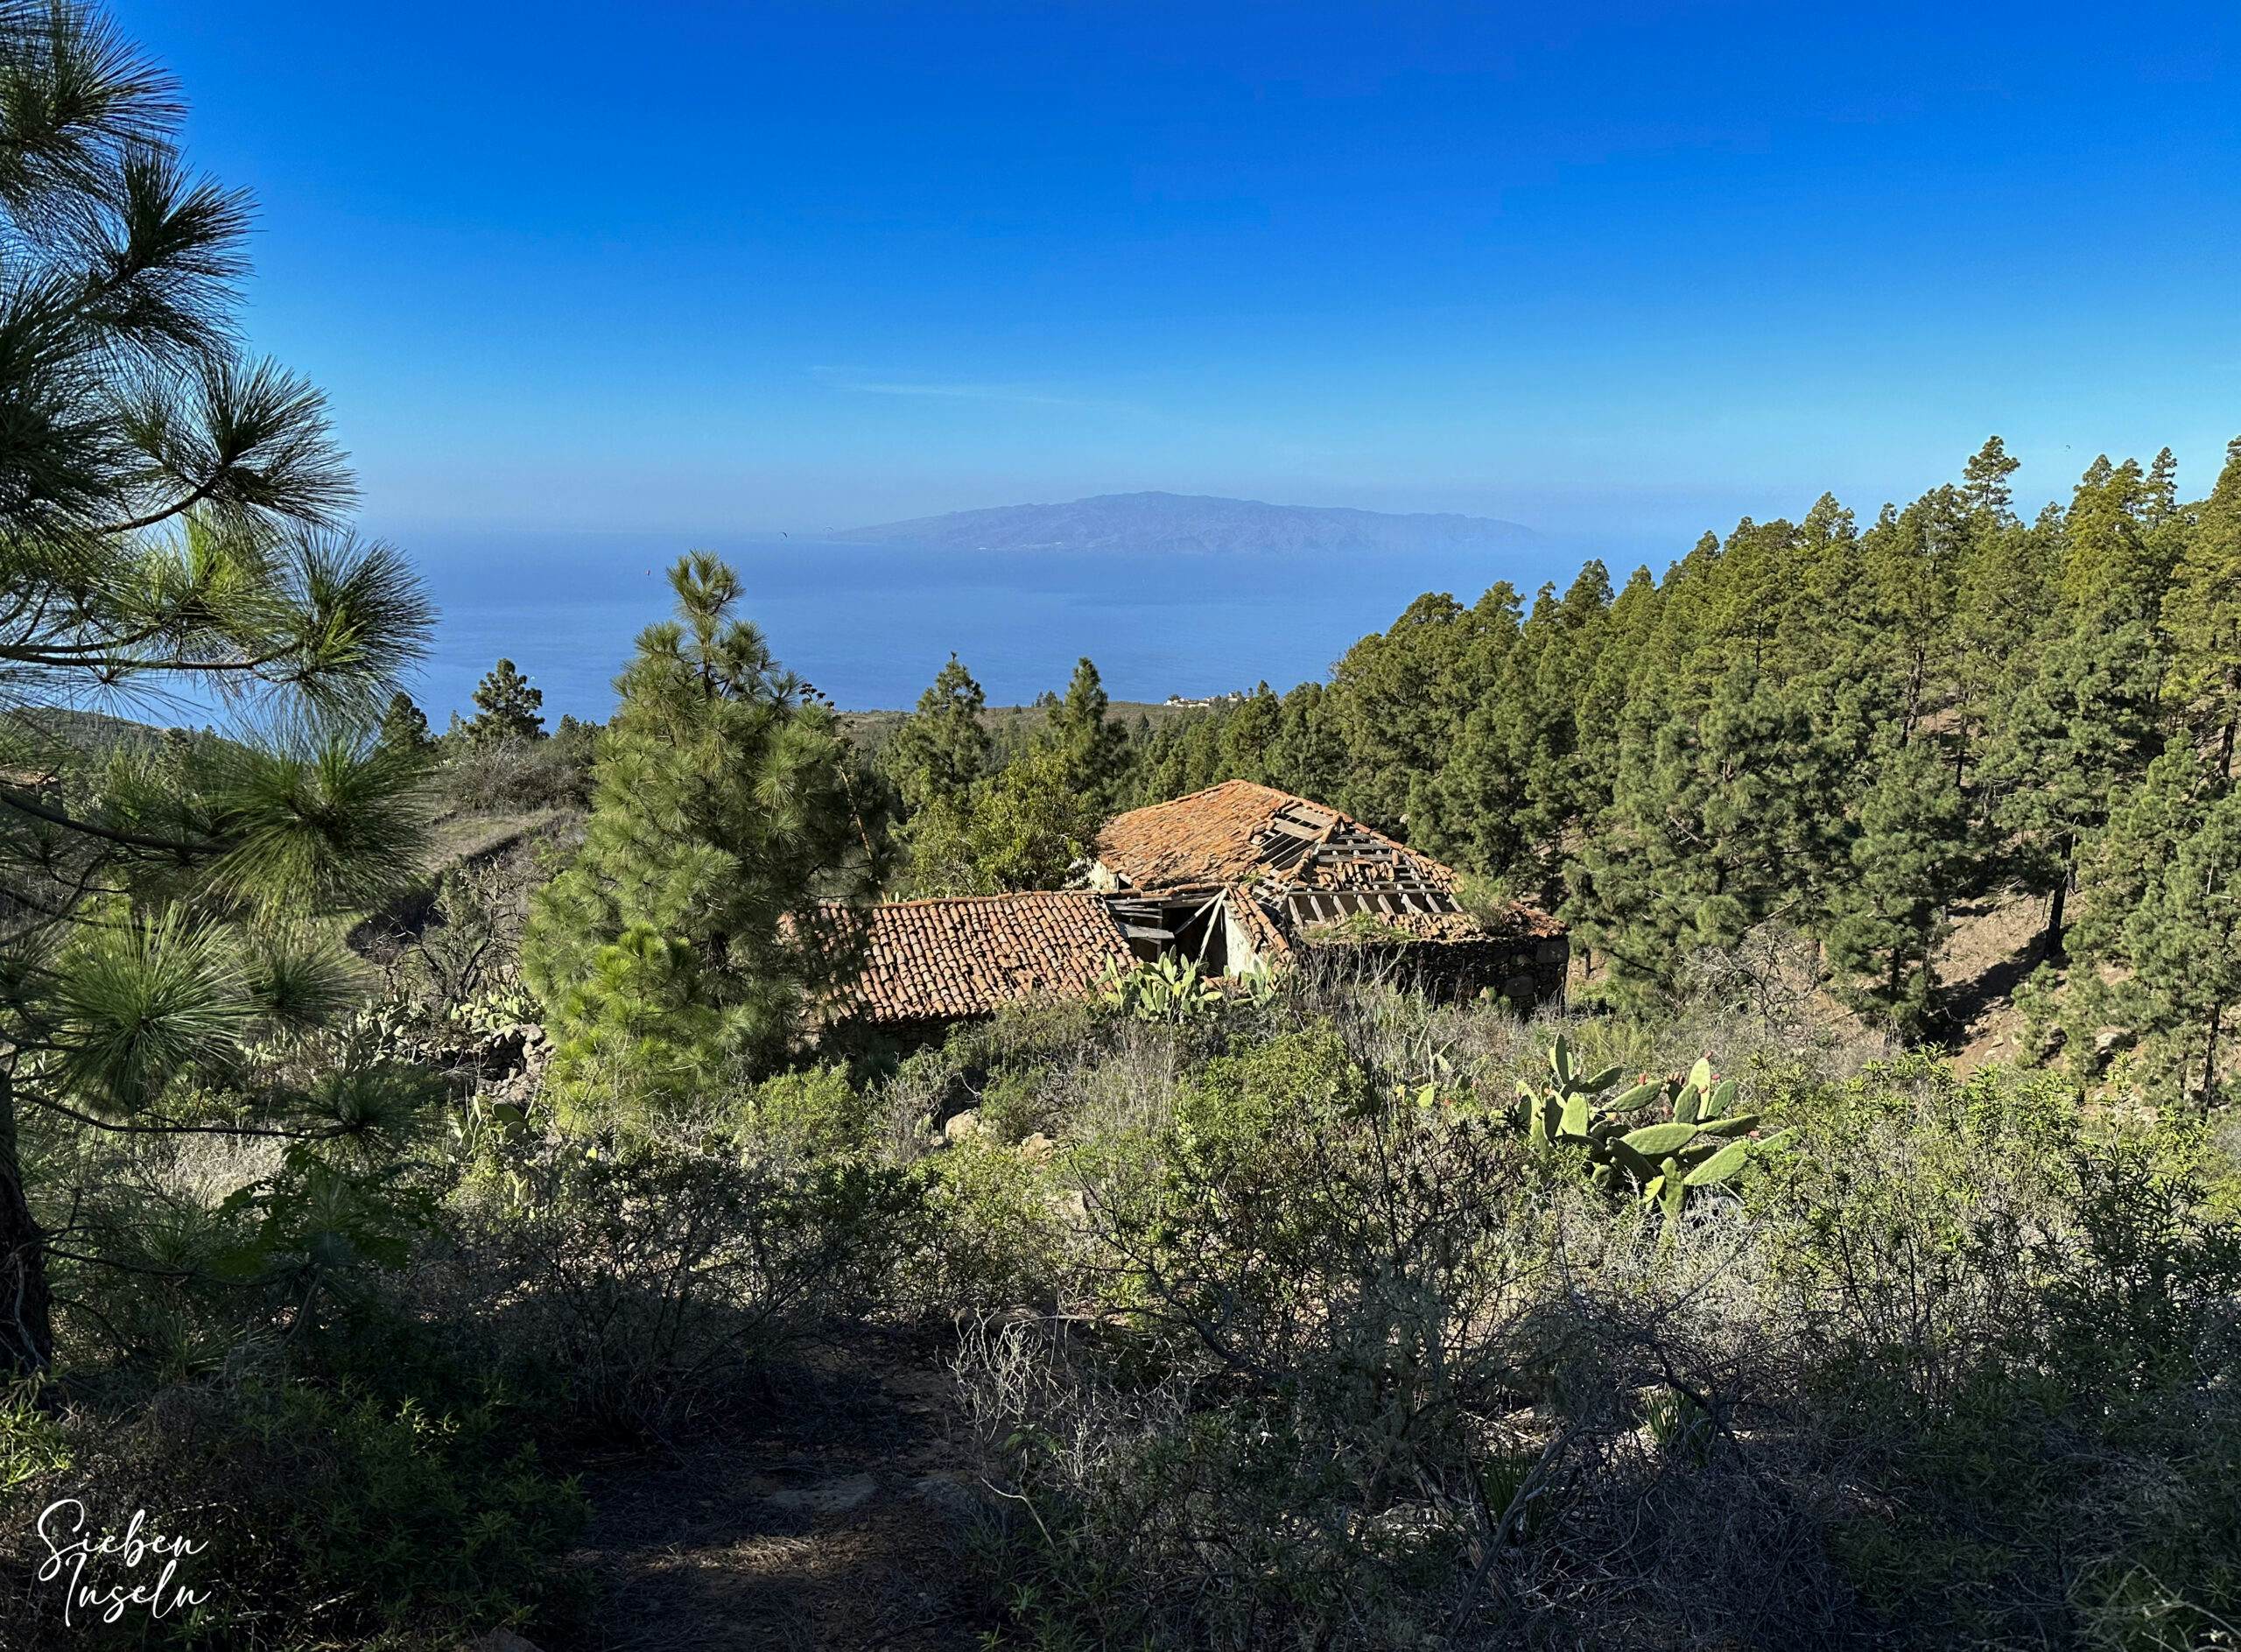 Casas del Aserradero with the neighbouring island of La Gomera in the background